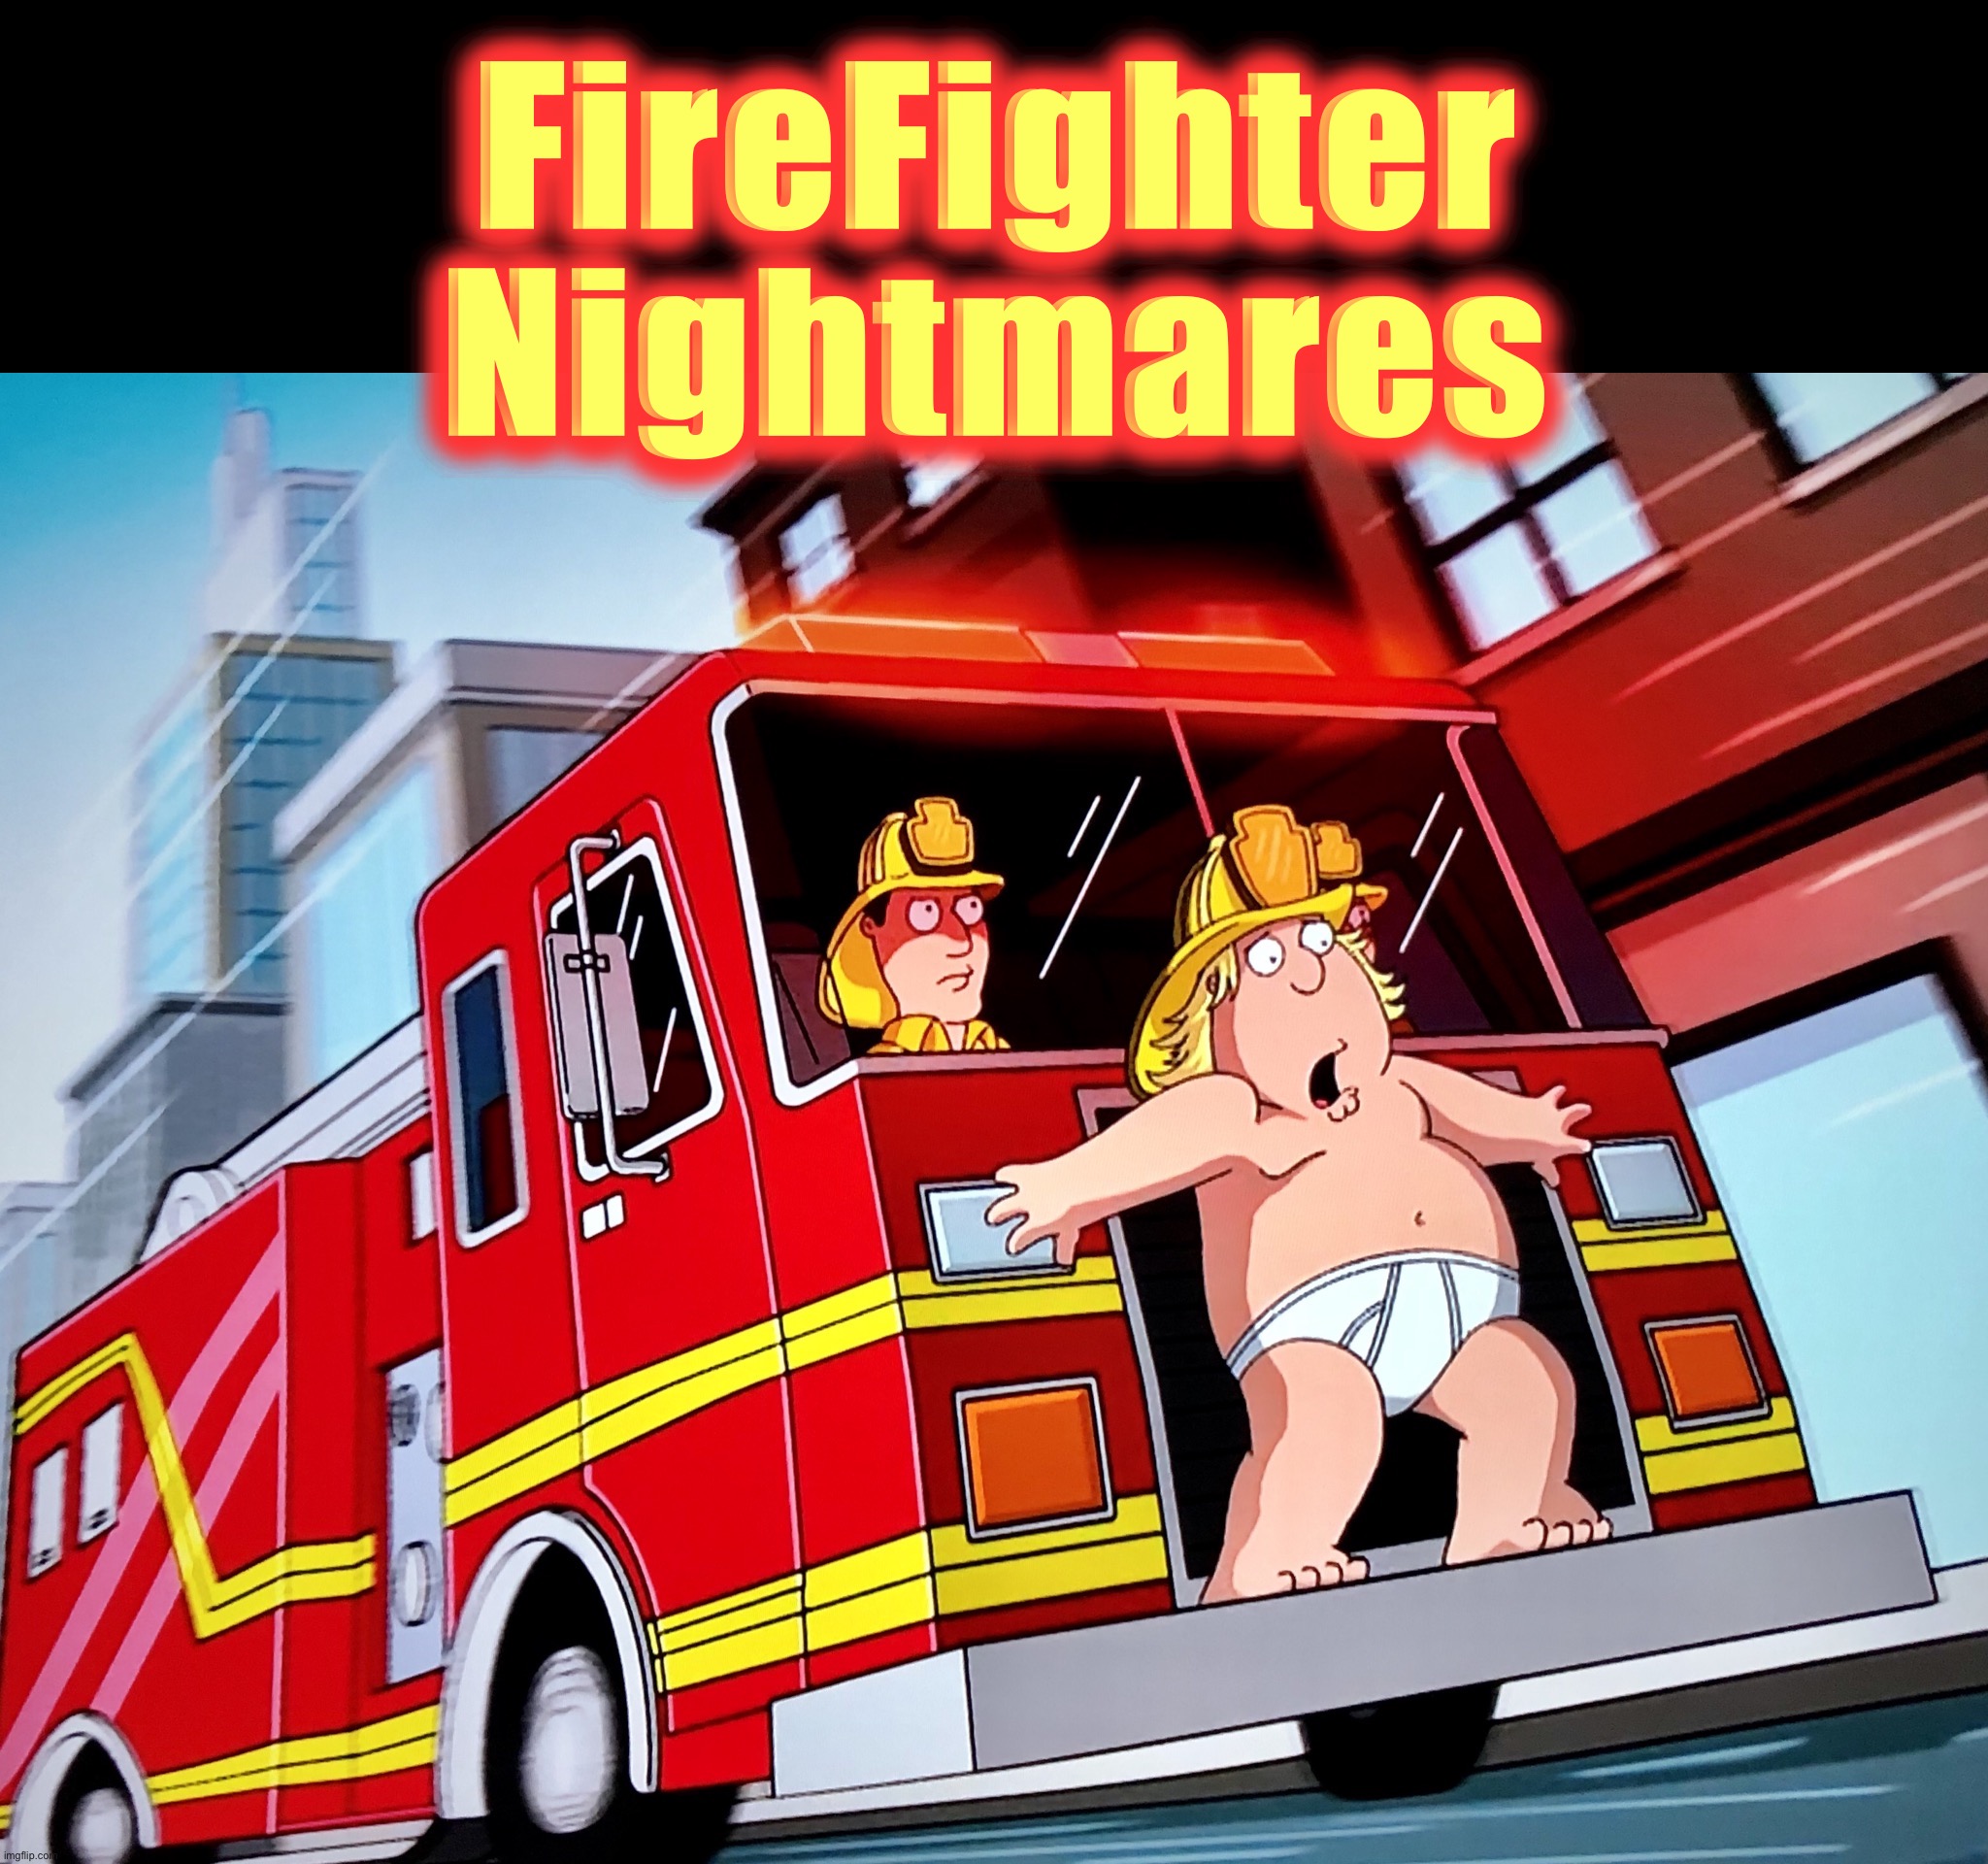 Swim Test Anxiety | FireFighter
Nightmares | image tagged in firefighter,memes,nightmare,anxiety,underwear,speeding | made w/ Imgflip meme maker